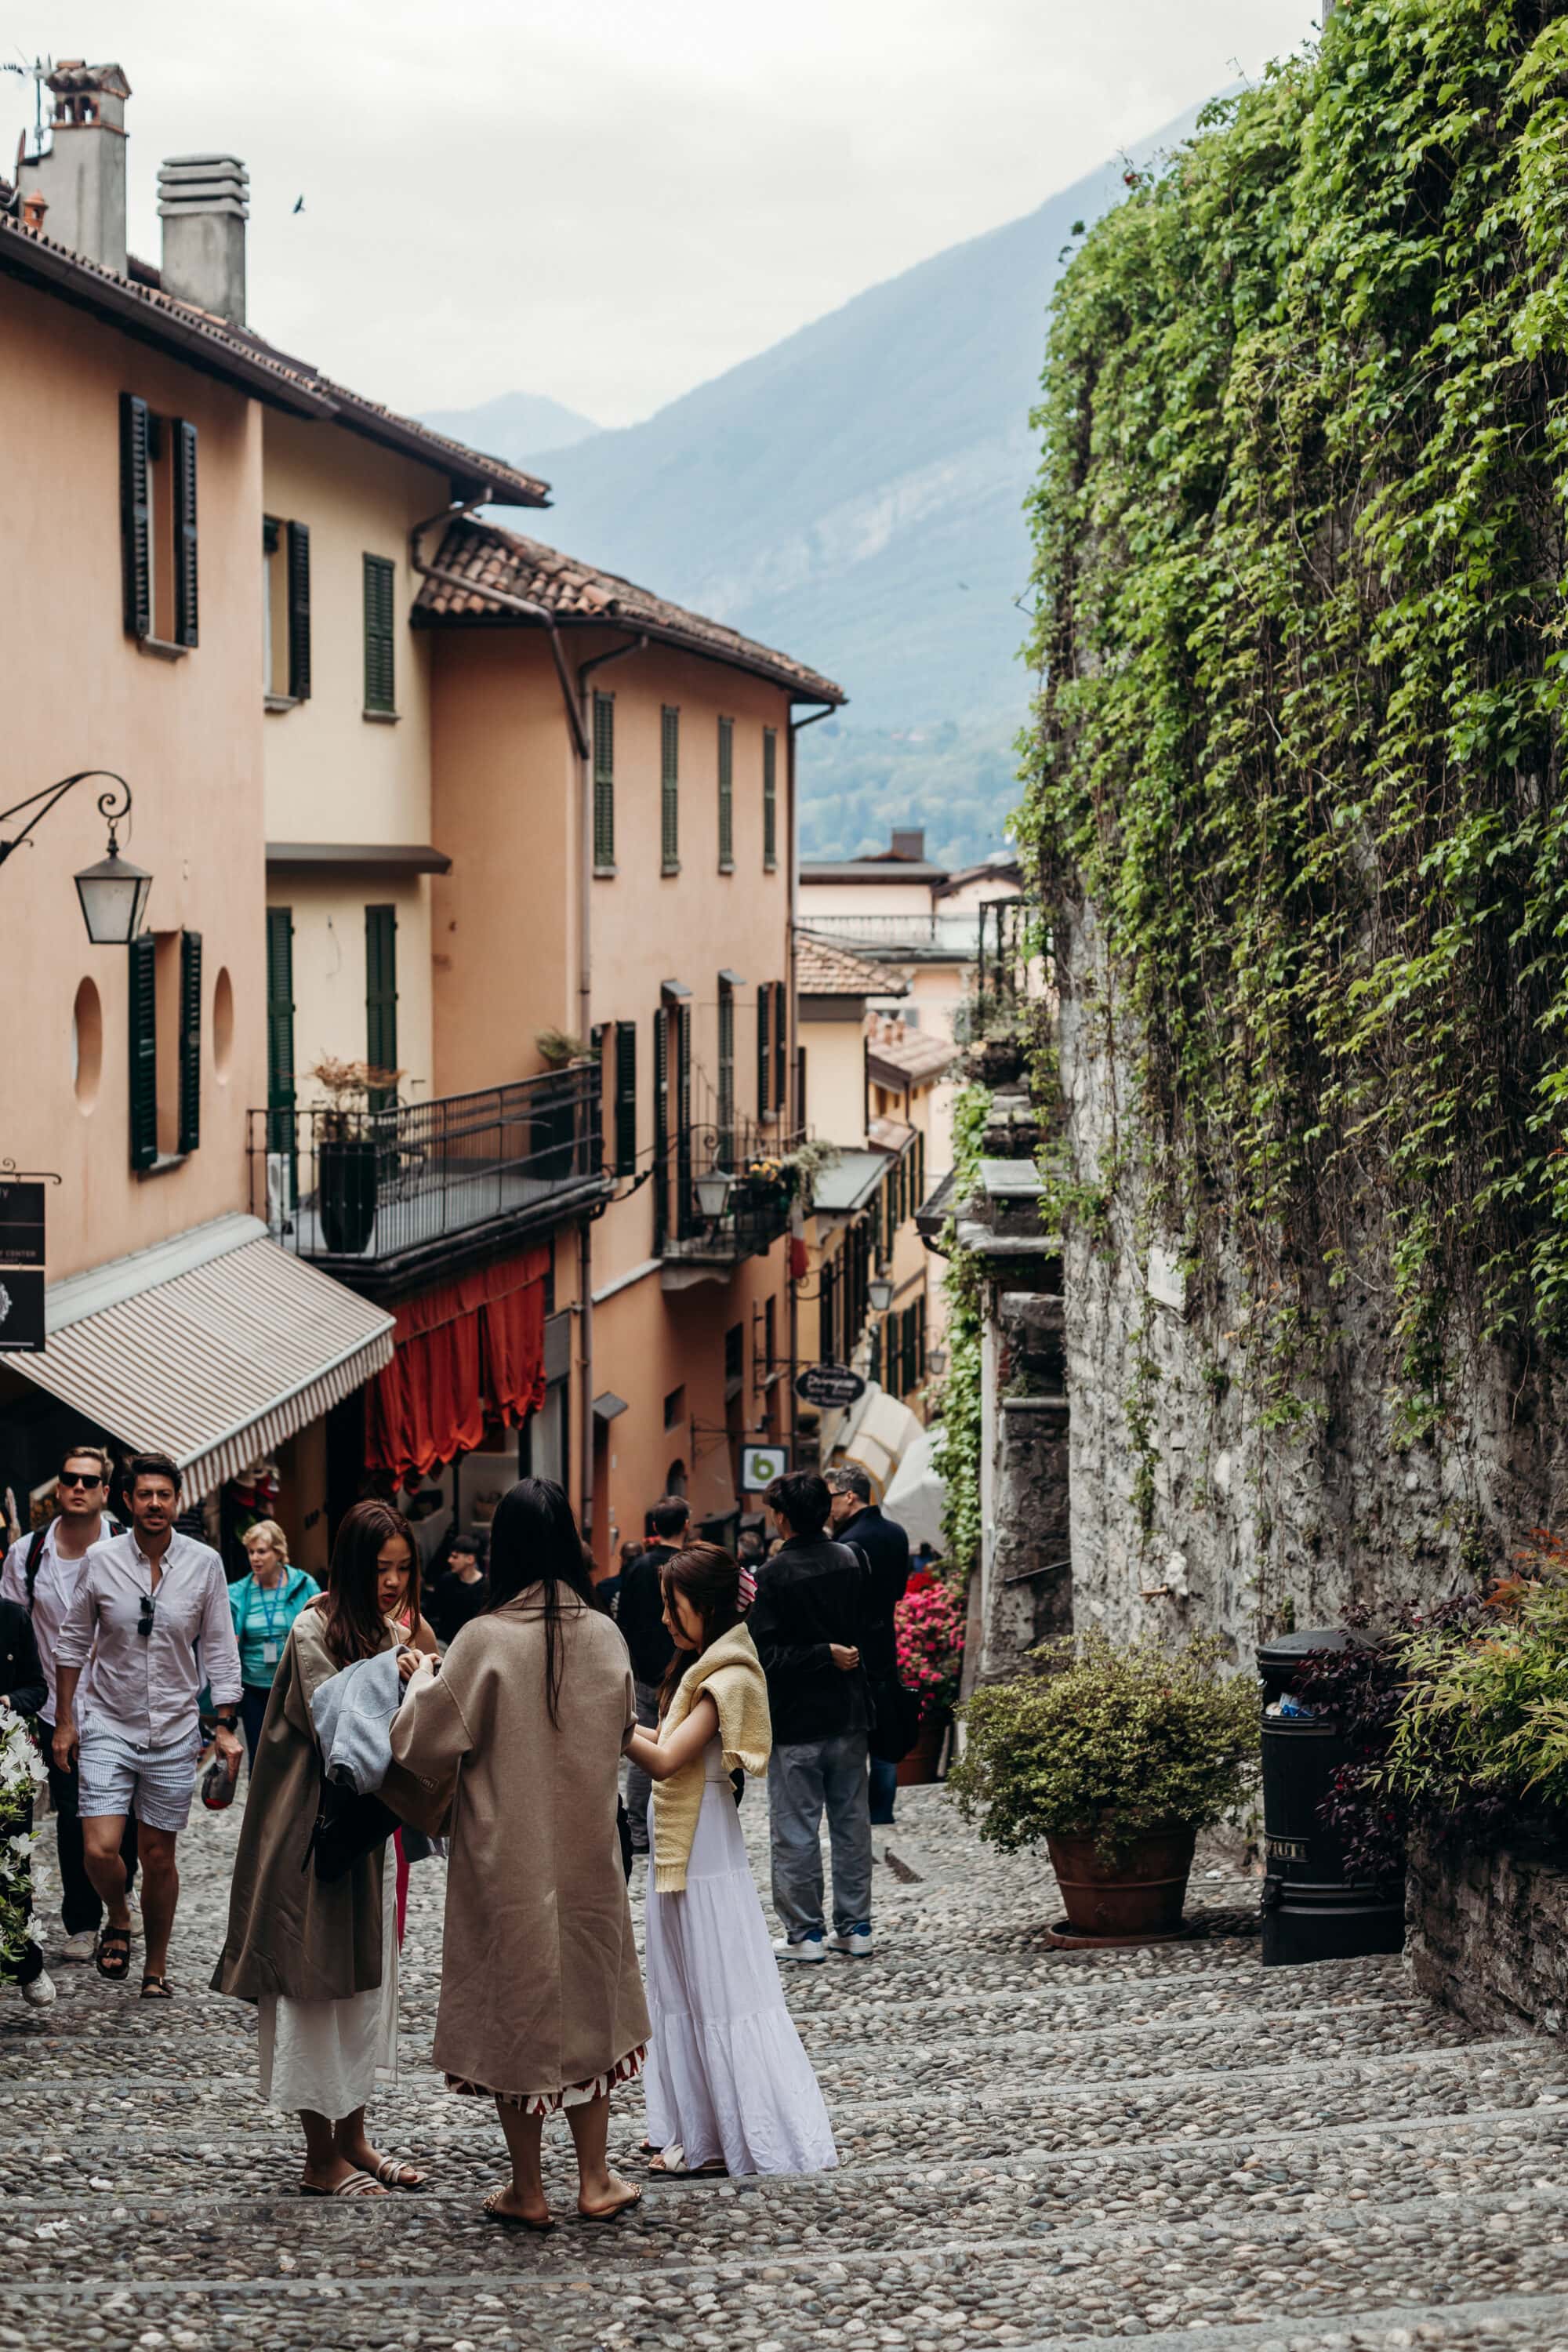 exploring the gorgeous town of Bellagio